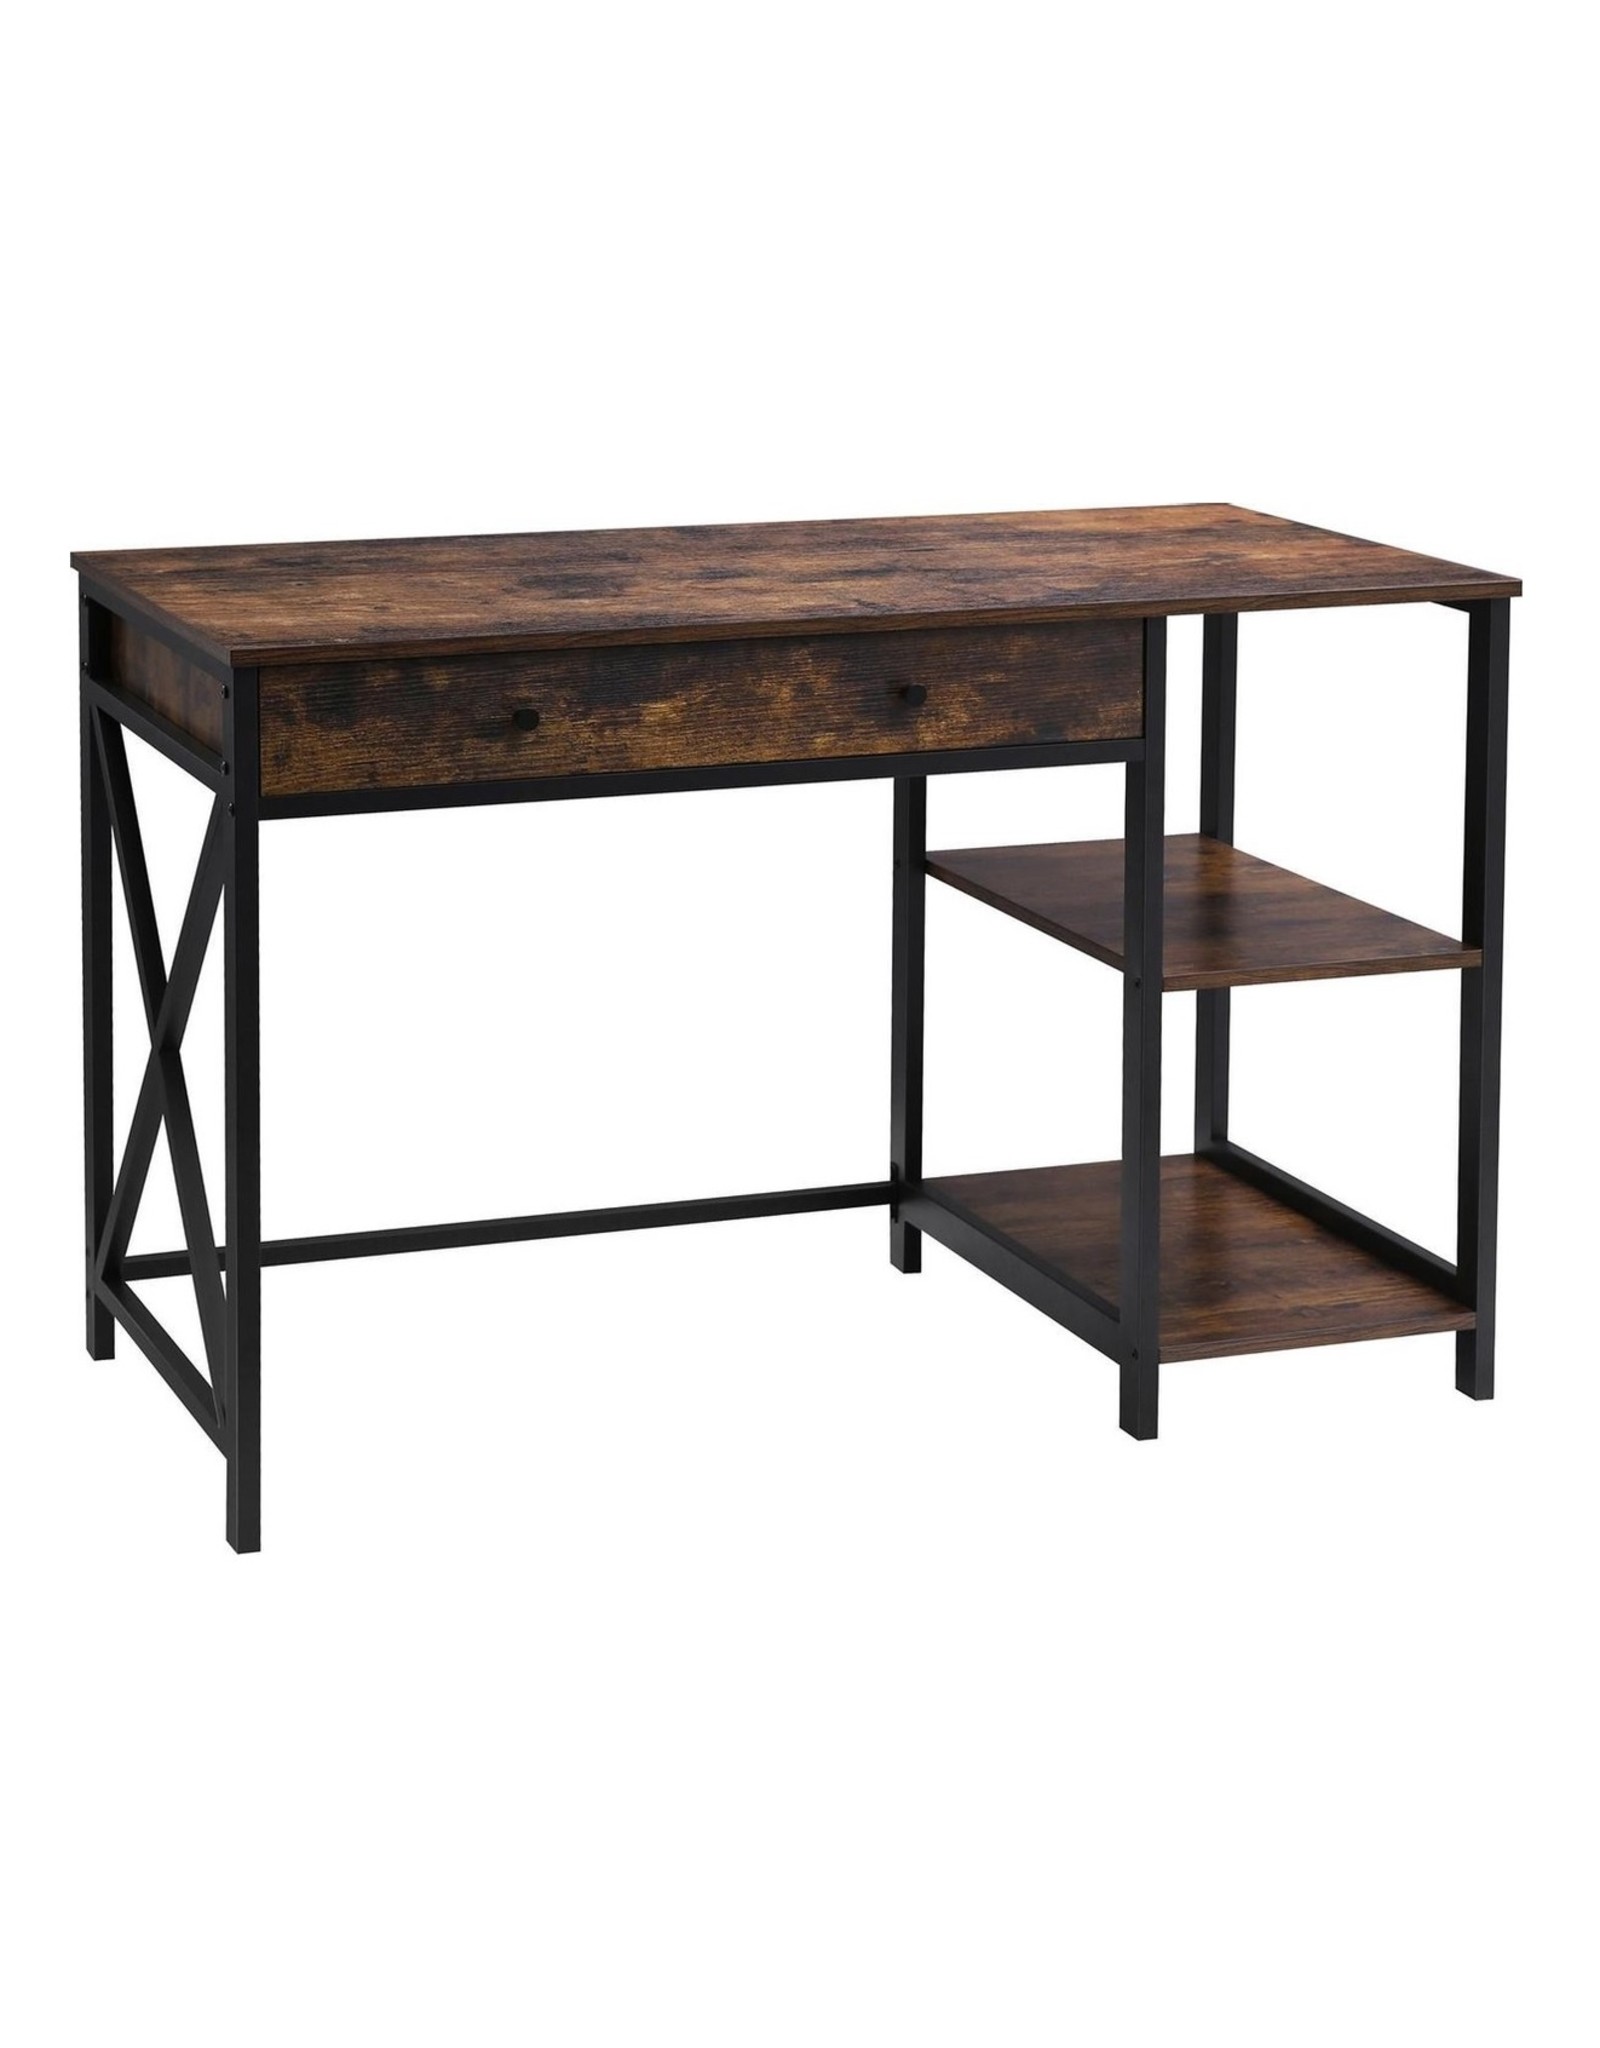 Parya Home Parya Home - Wooden Desk - Computer Table - Dark Brown - Metal